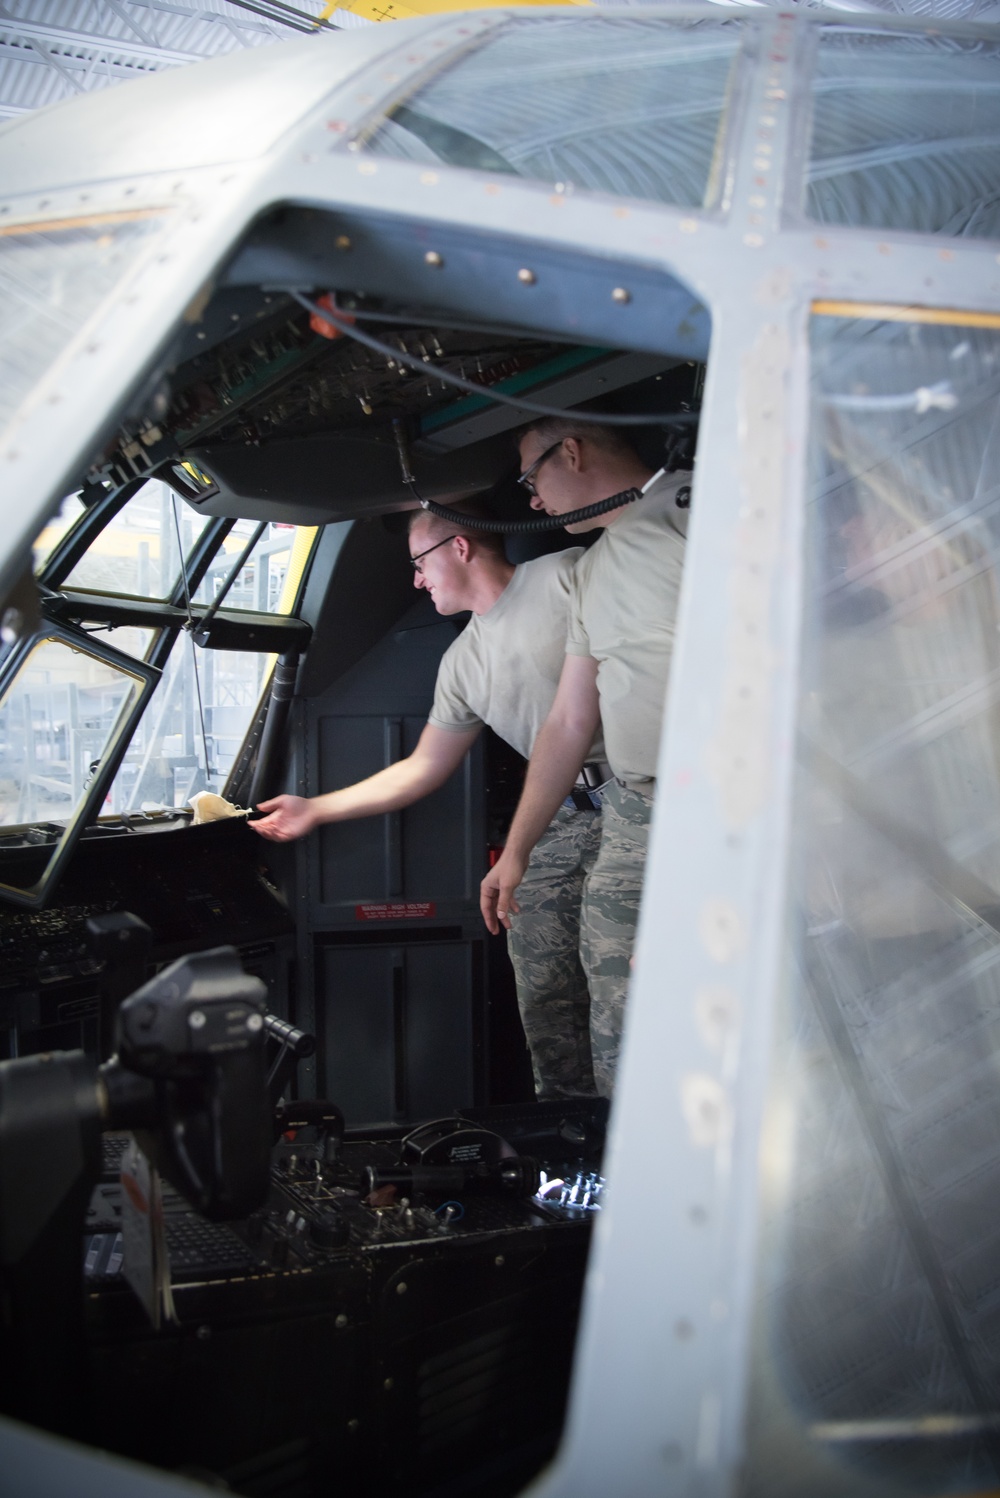 913th MXS training helps keep 403rd fleet mission-ready